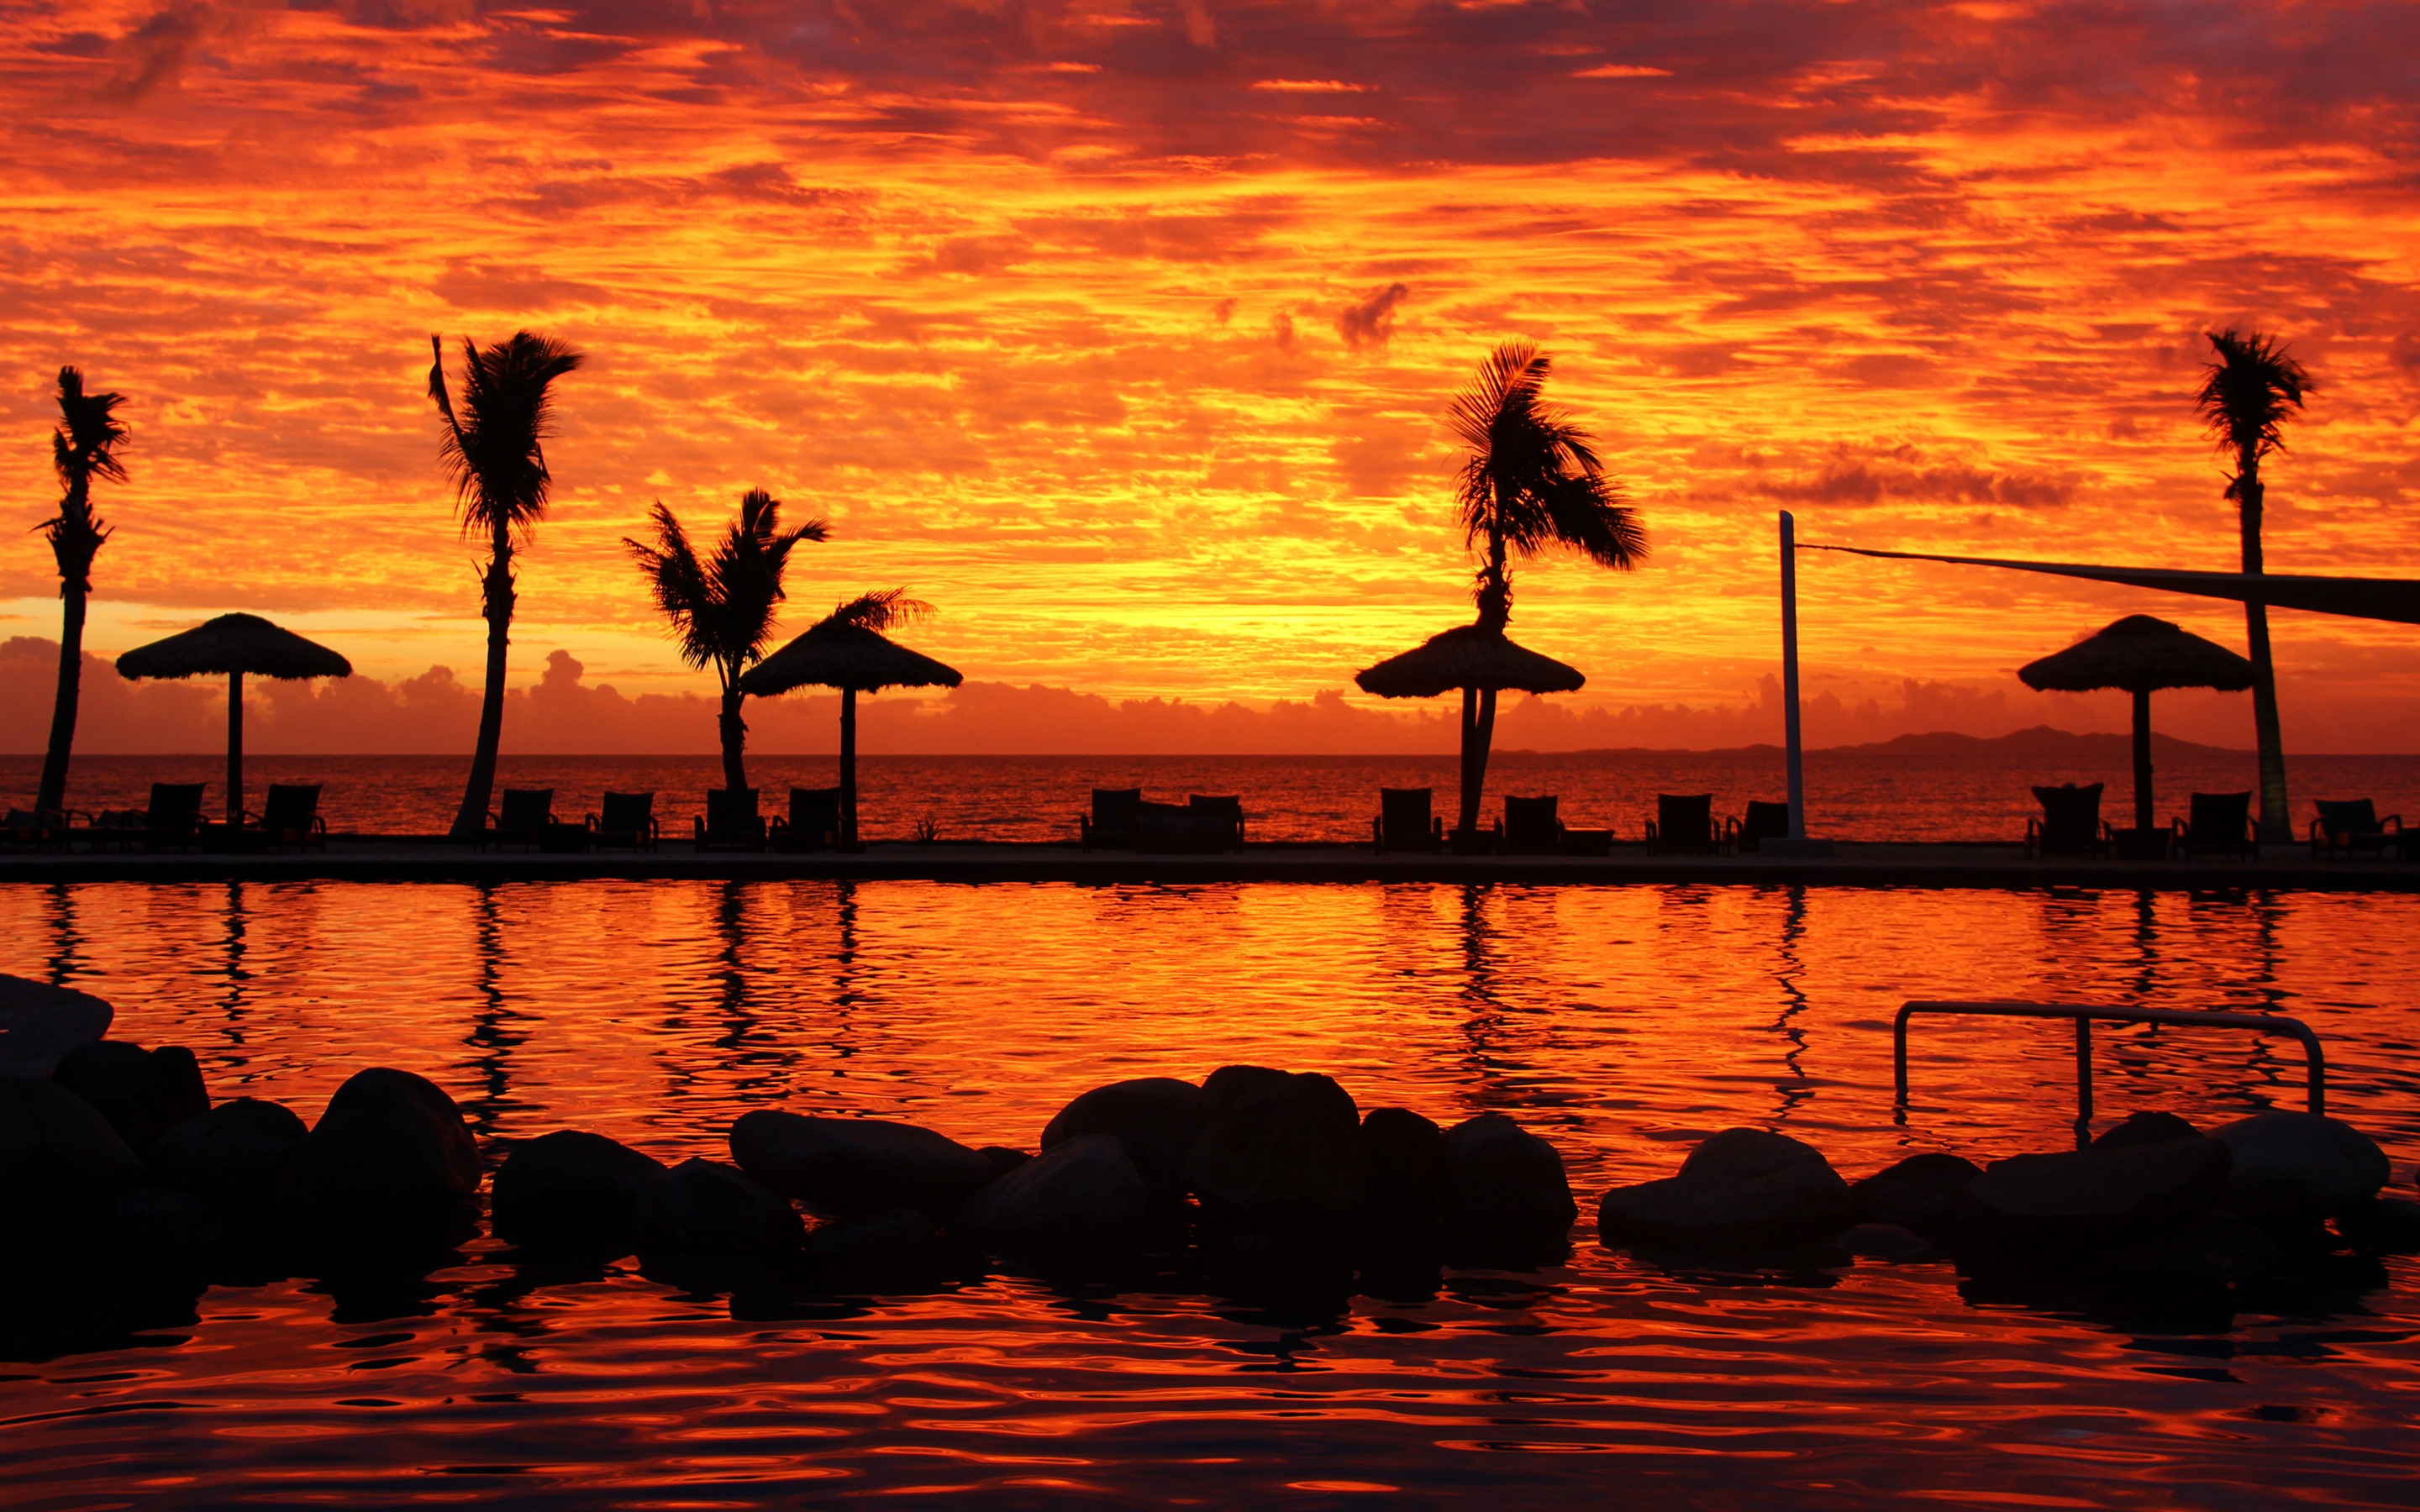 Fijian Sunset for 2880 x 1800 Retina Display resolution